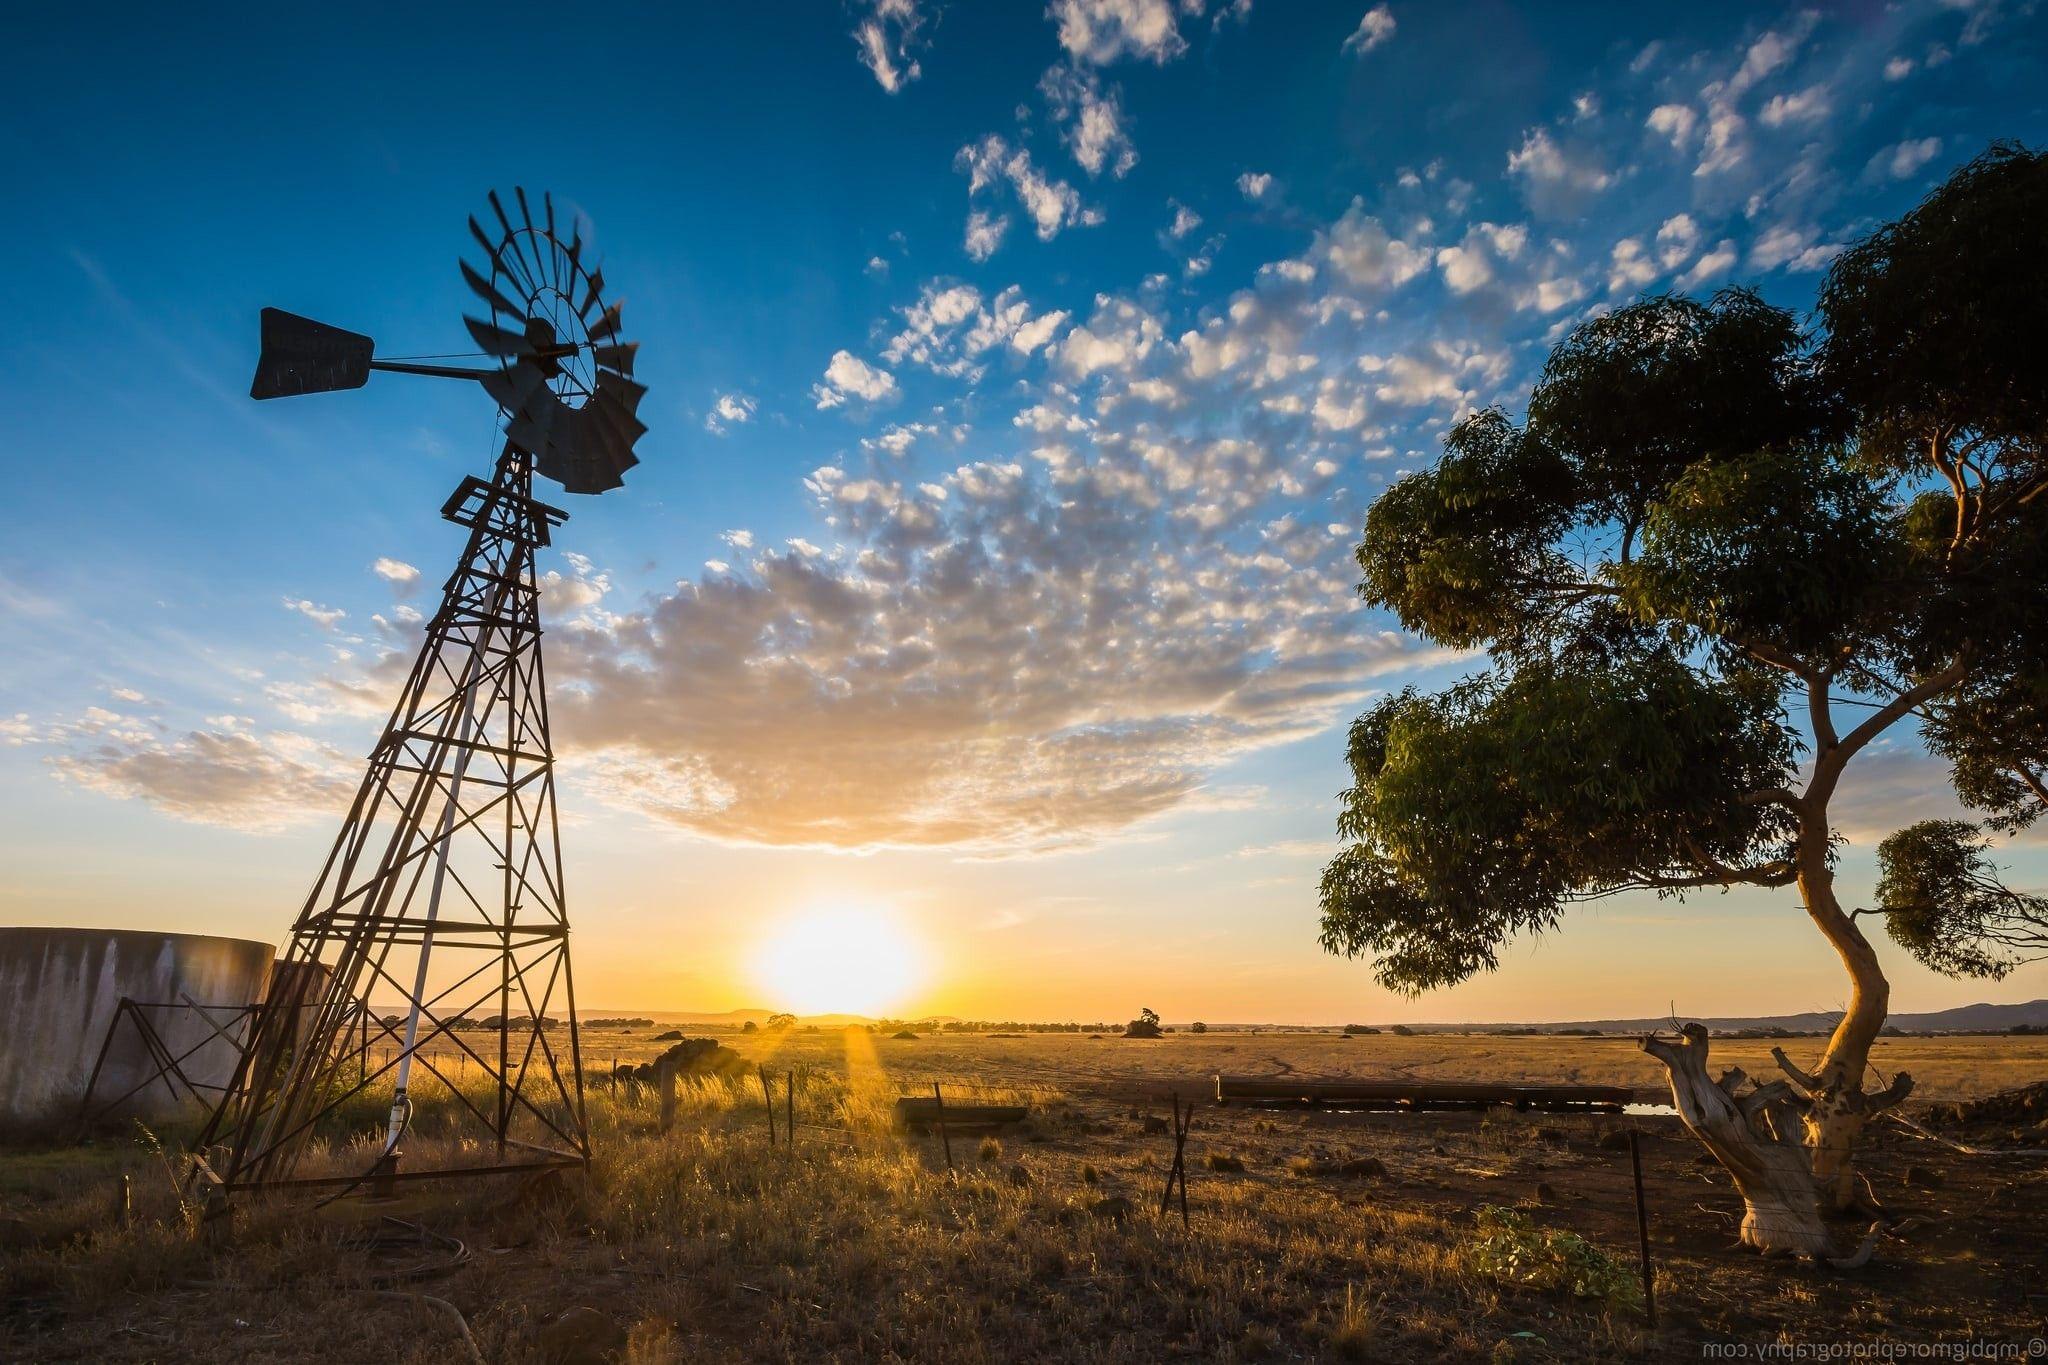 Res: 2048x Australia sunset farm rural landscape wallpaper